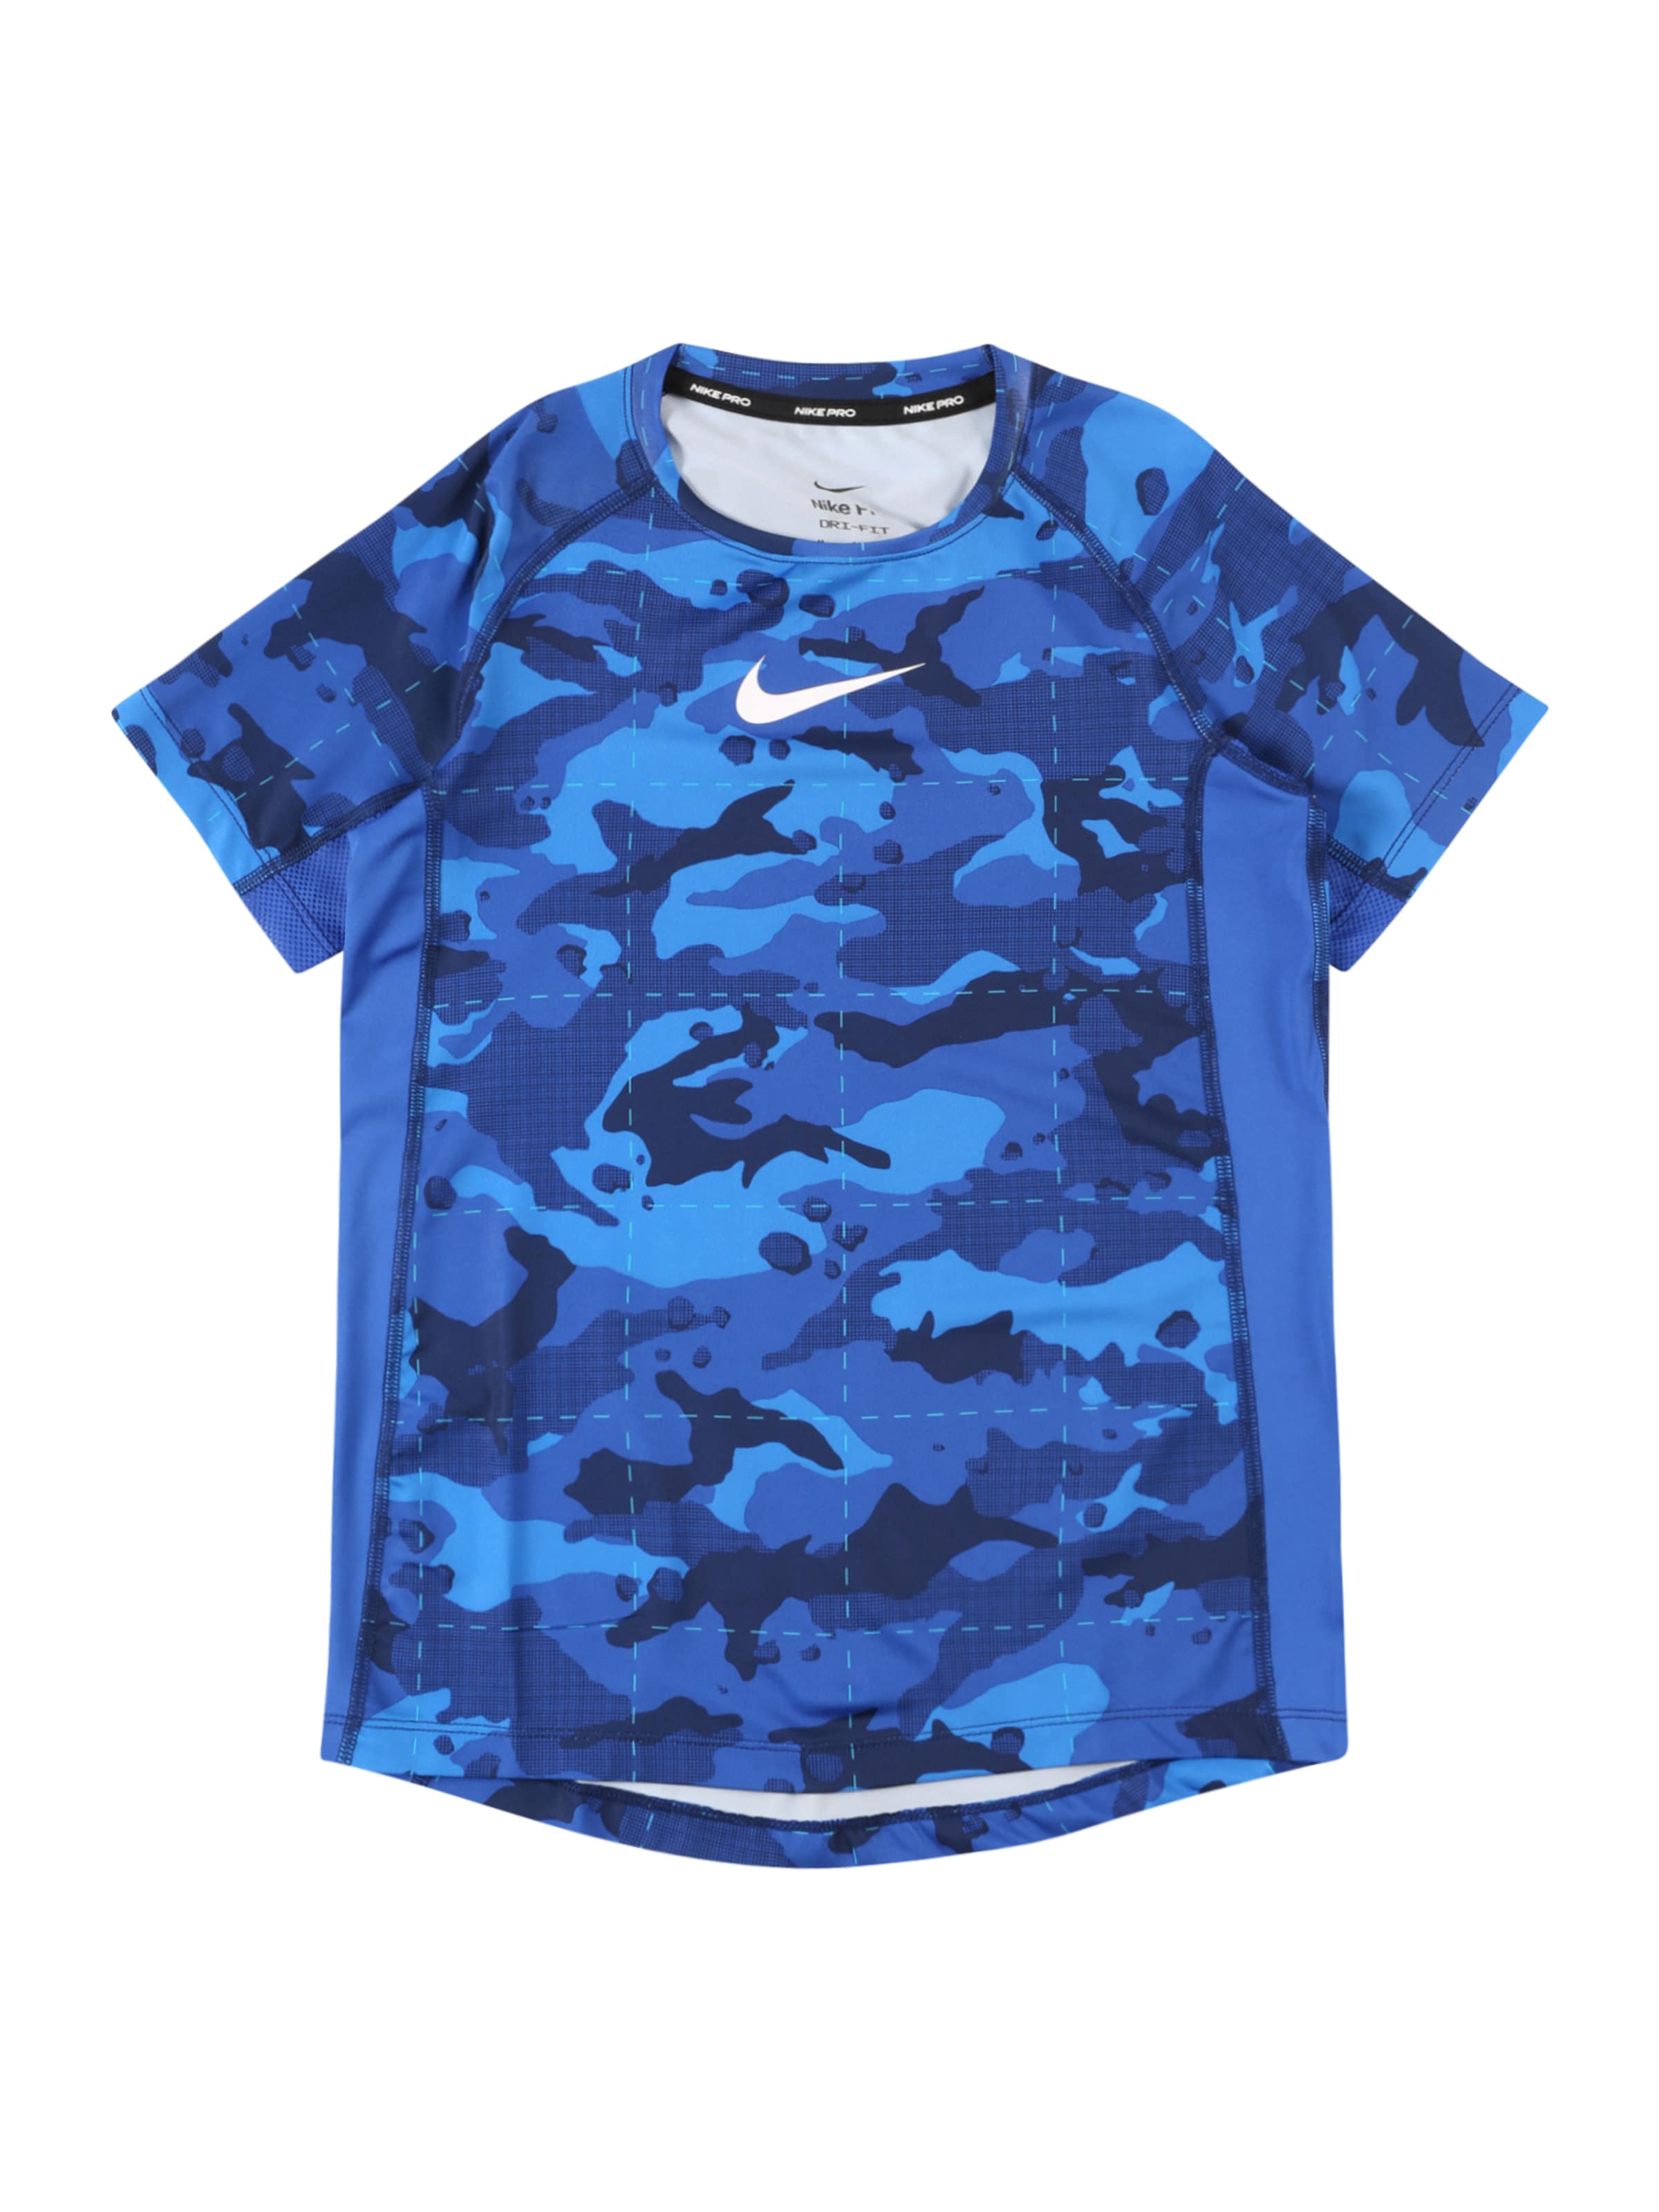 Enfants 92-140 T-Shirt fonctionnel NIKE en Bleu Roi, Marine 